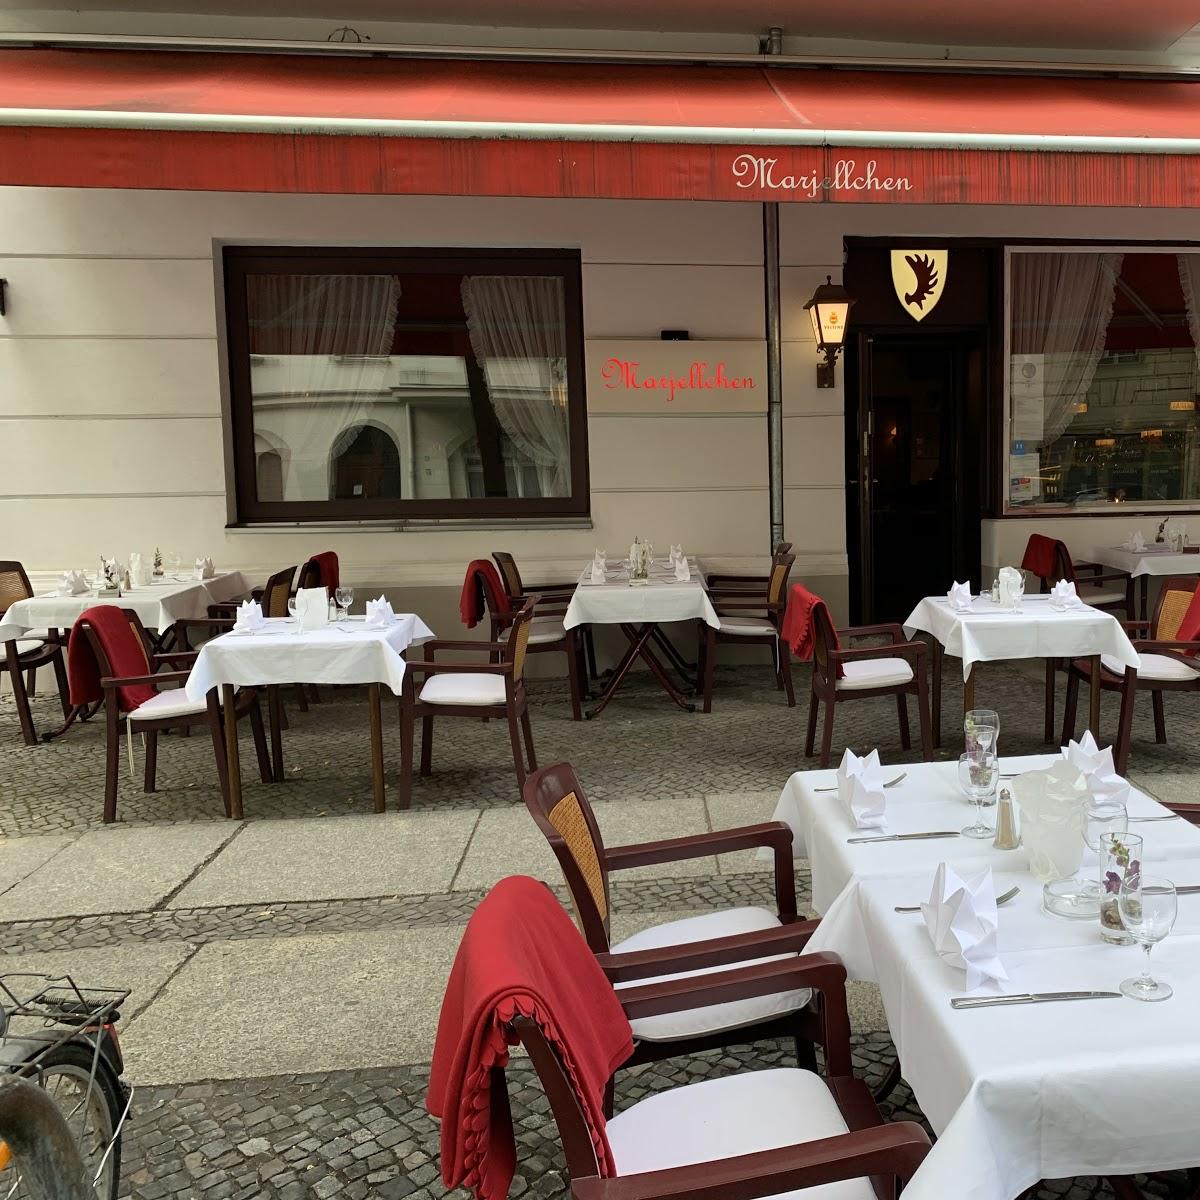 Restaurant "Marjellchen" in  Berlin